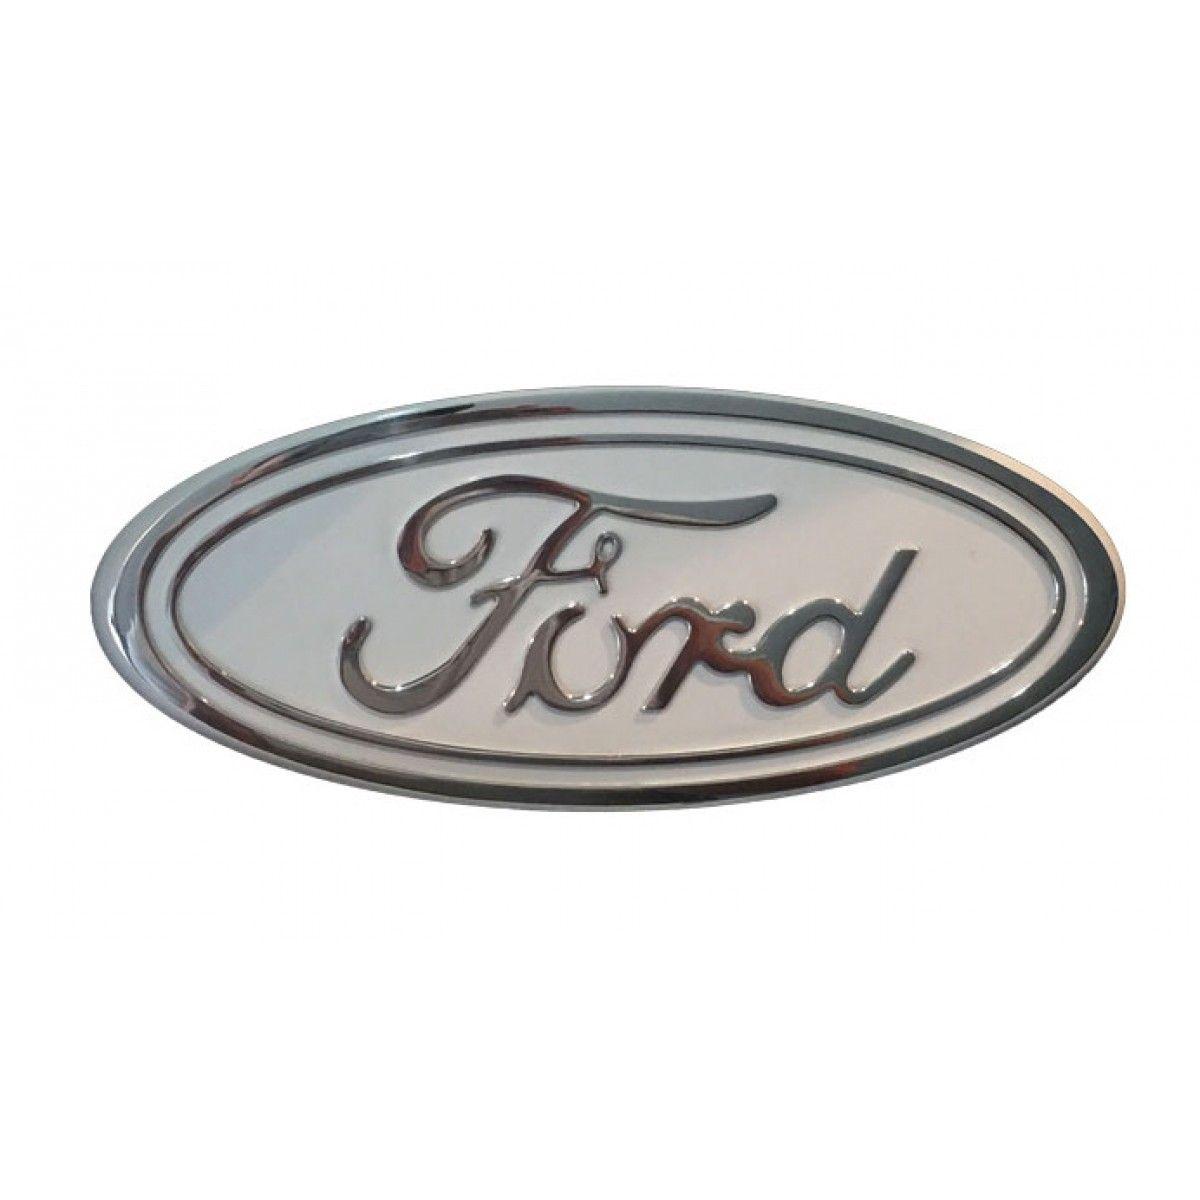 2015 Ford Logo - 2015 Ford F-150 Billet Grille & Tailgate Emblem 9 Inch White ...